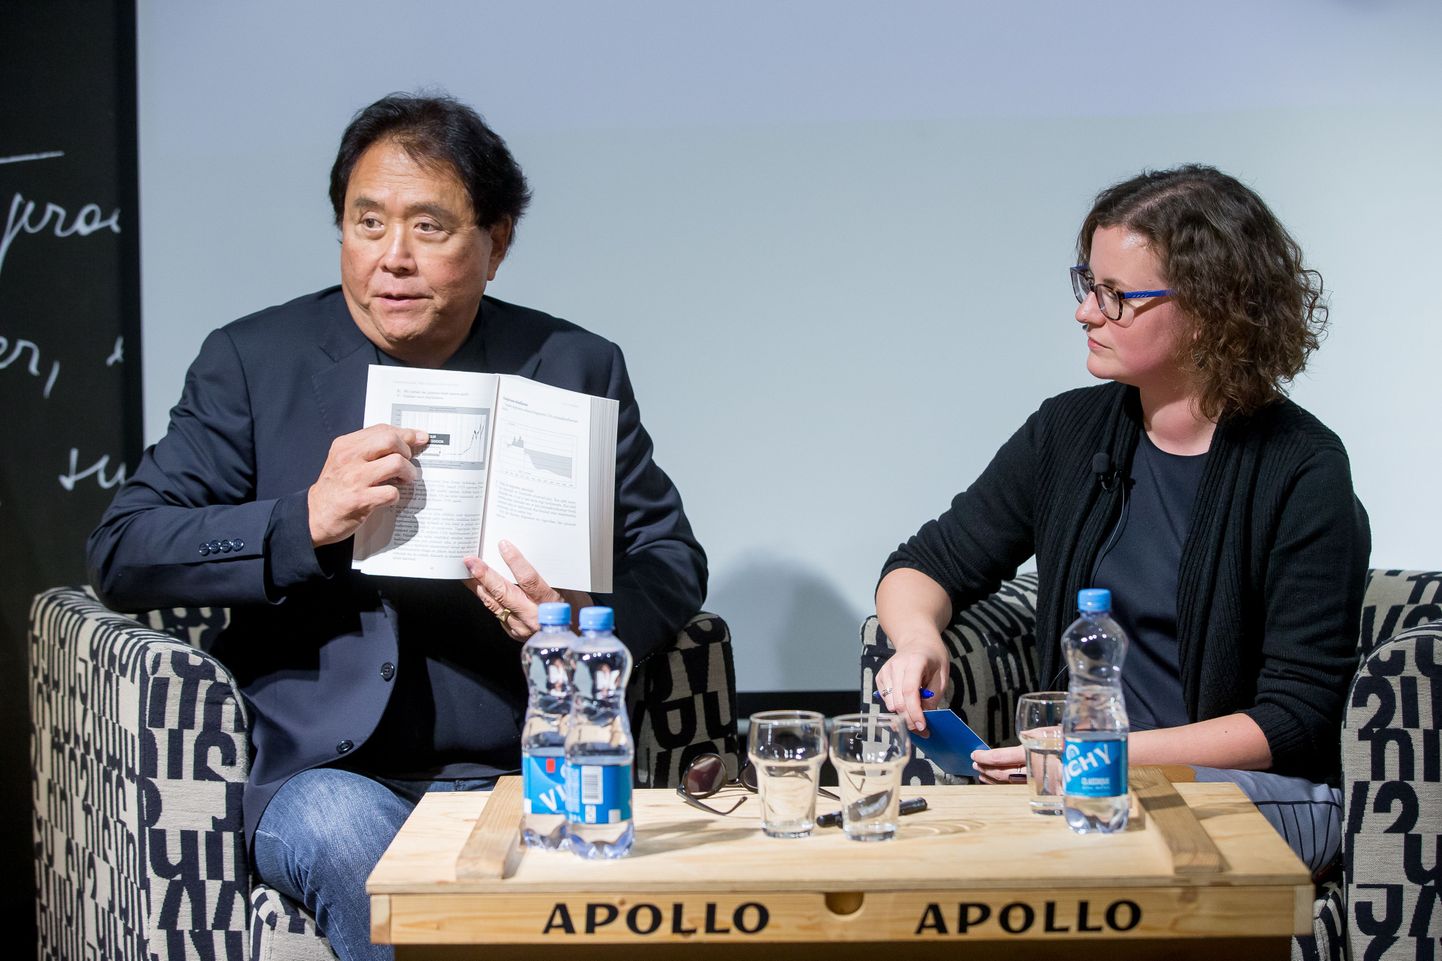 Robert Toru Kiyosaki jagas Solarise Apollos autogramme.